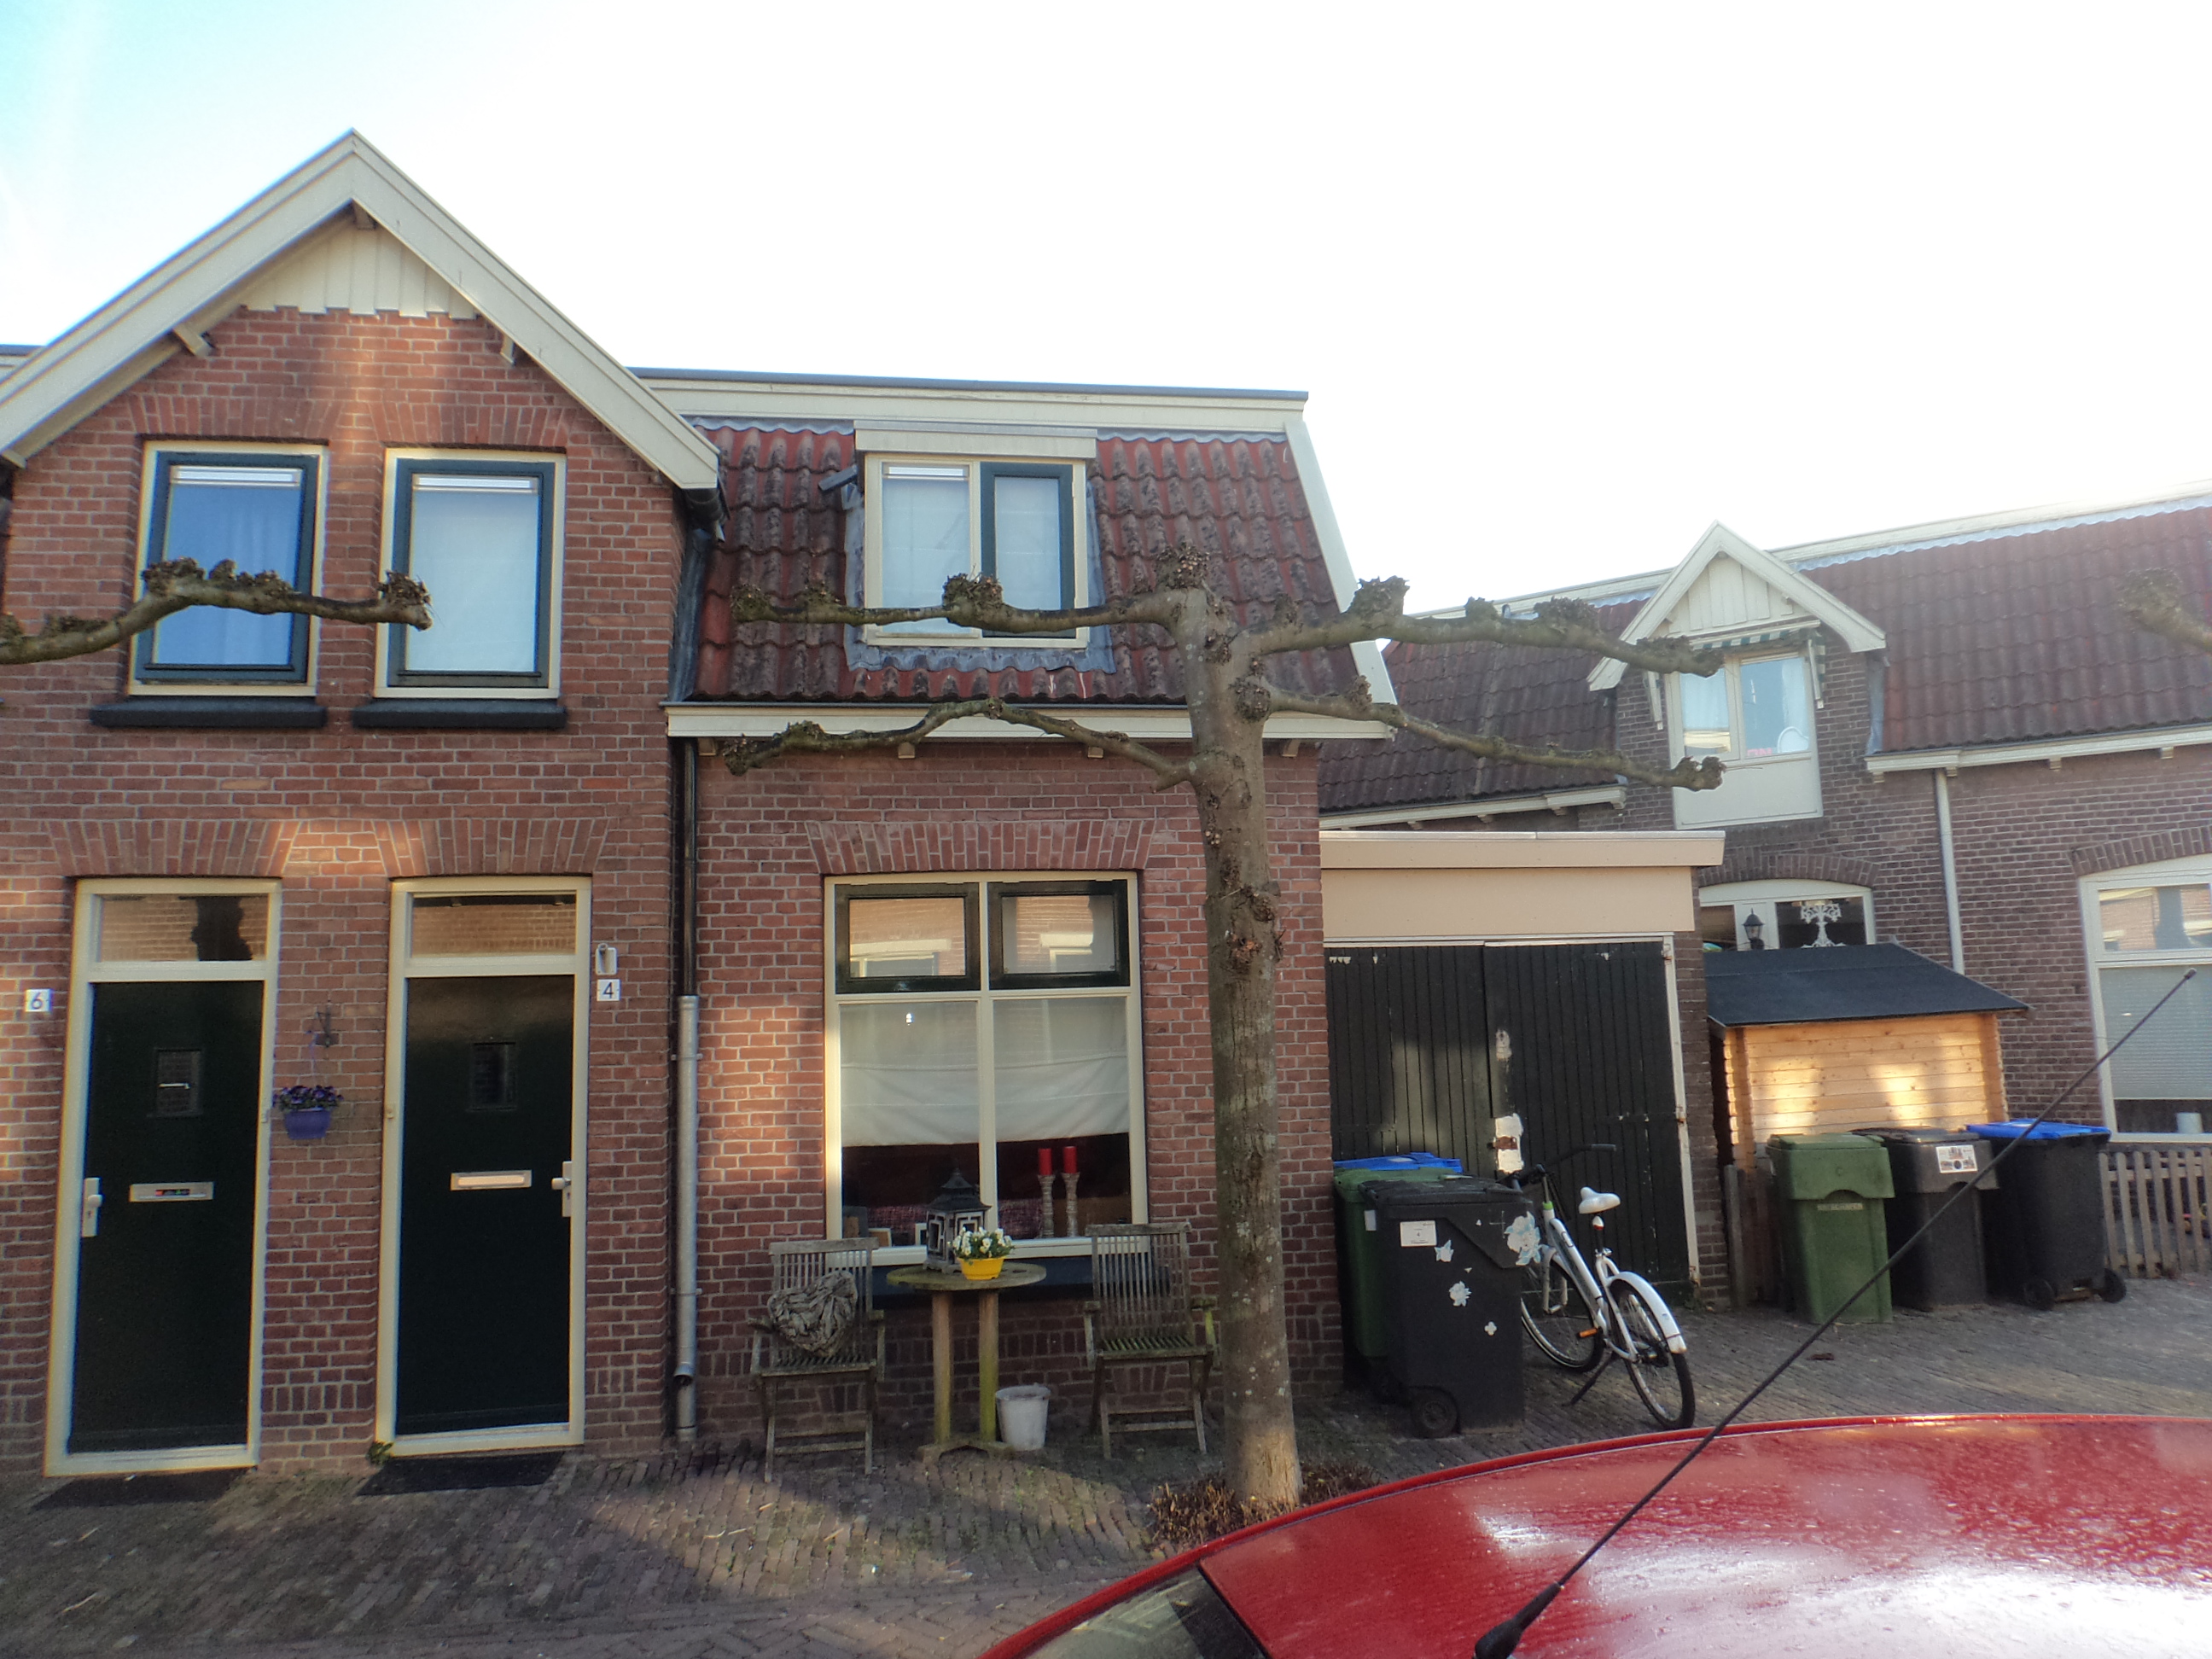 Riouwstraat 4, 7942 VT Meppel, Nederland